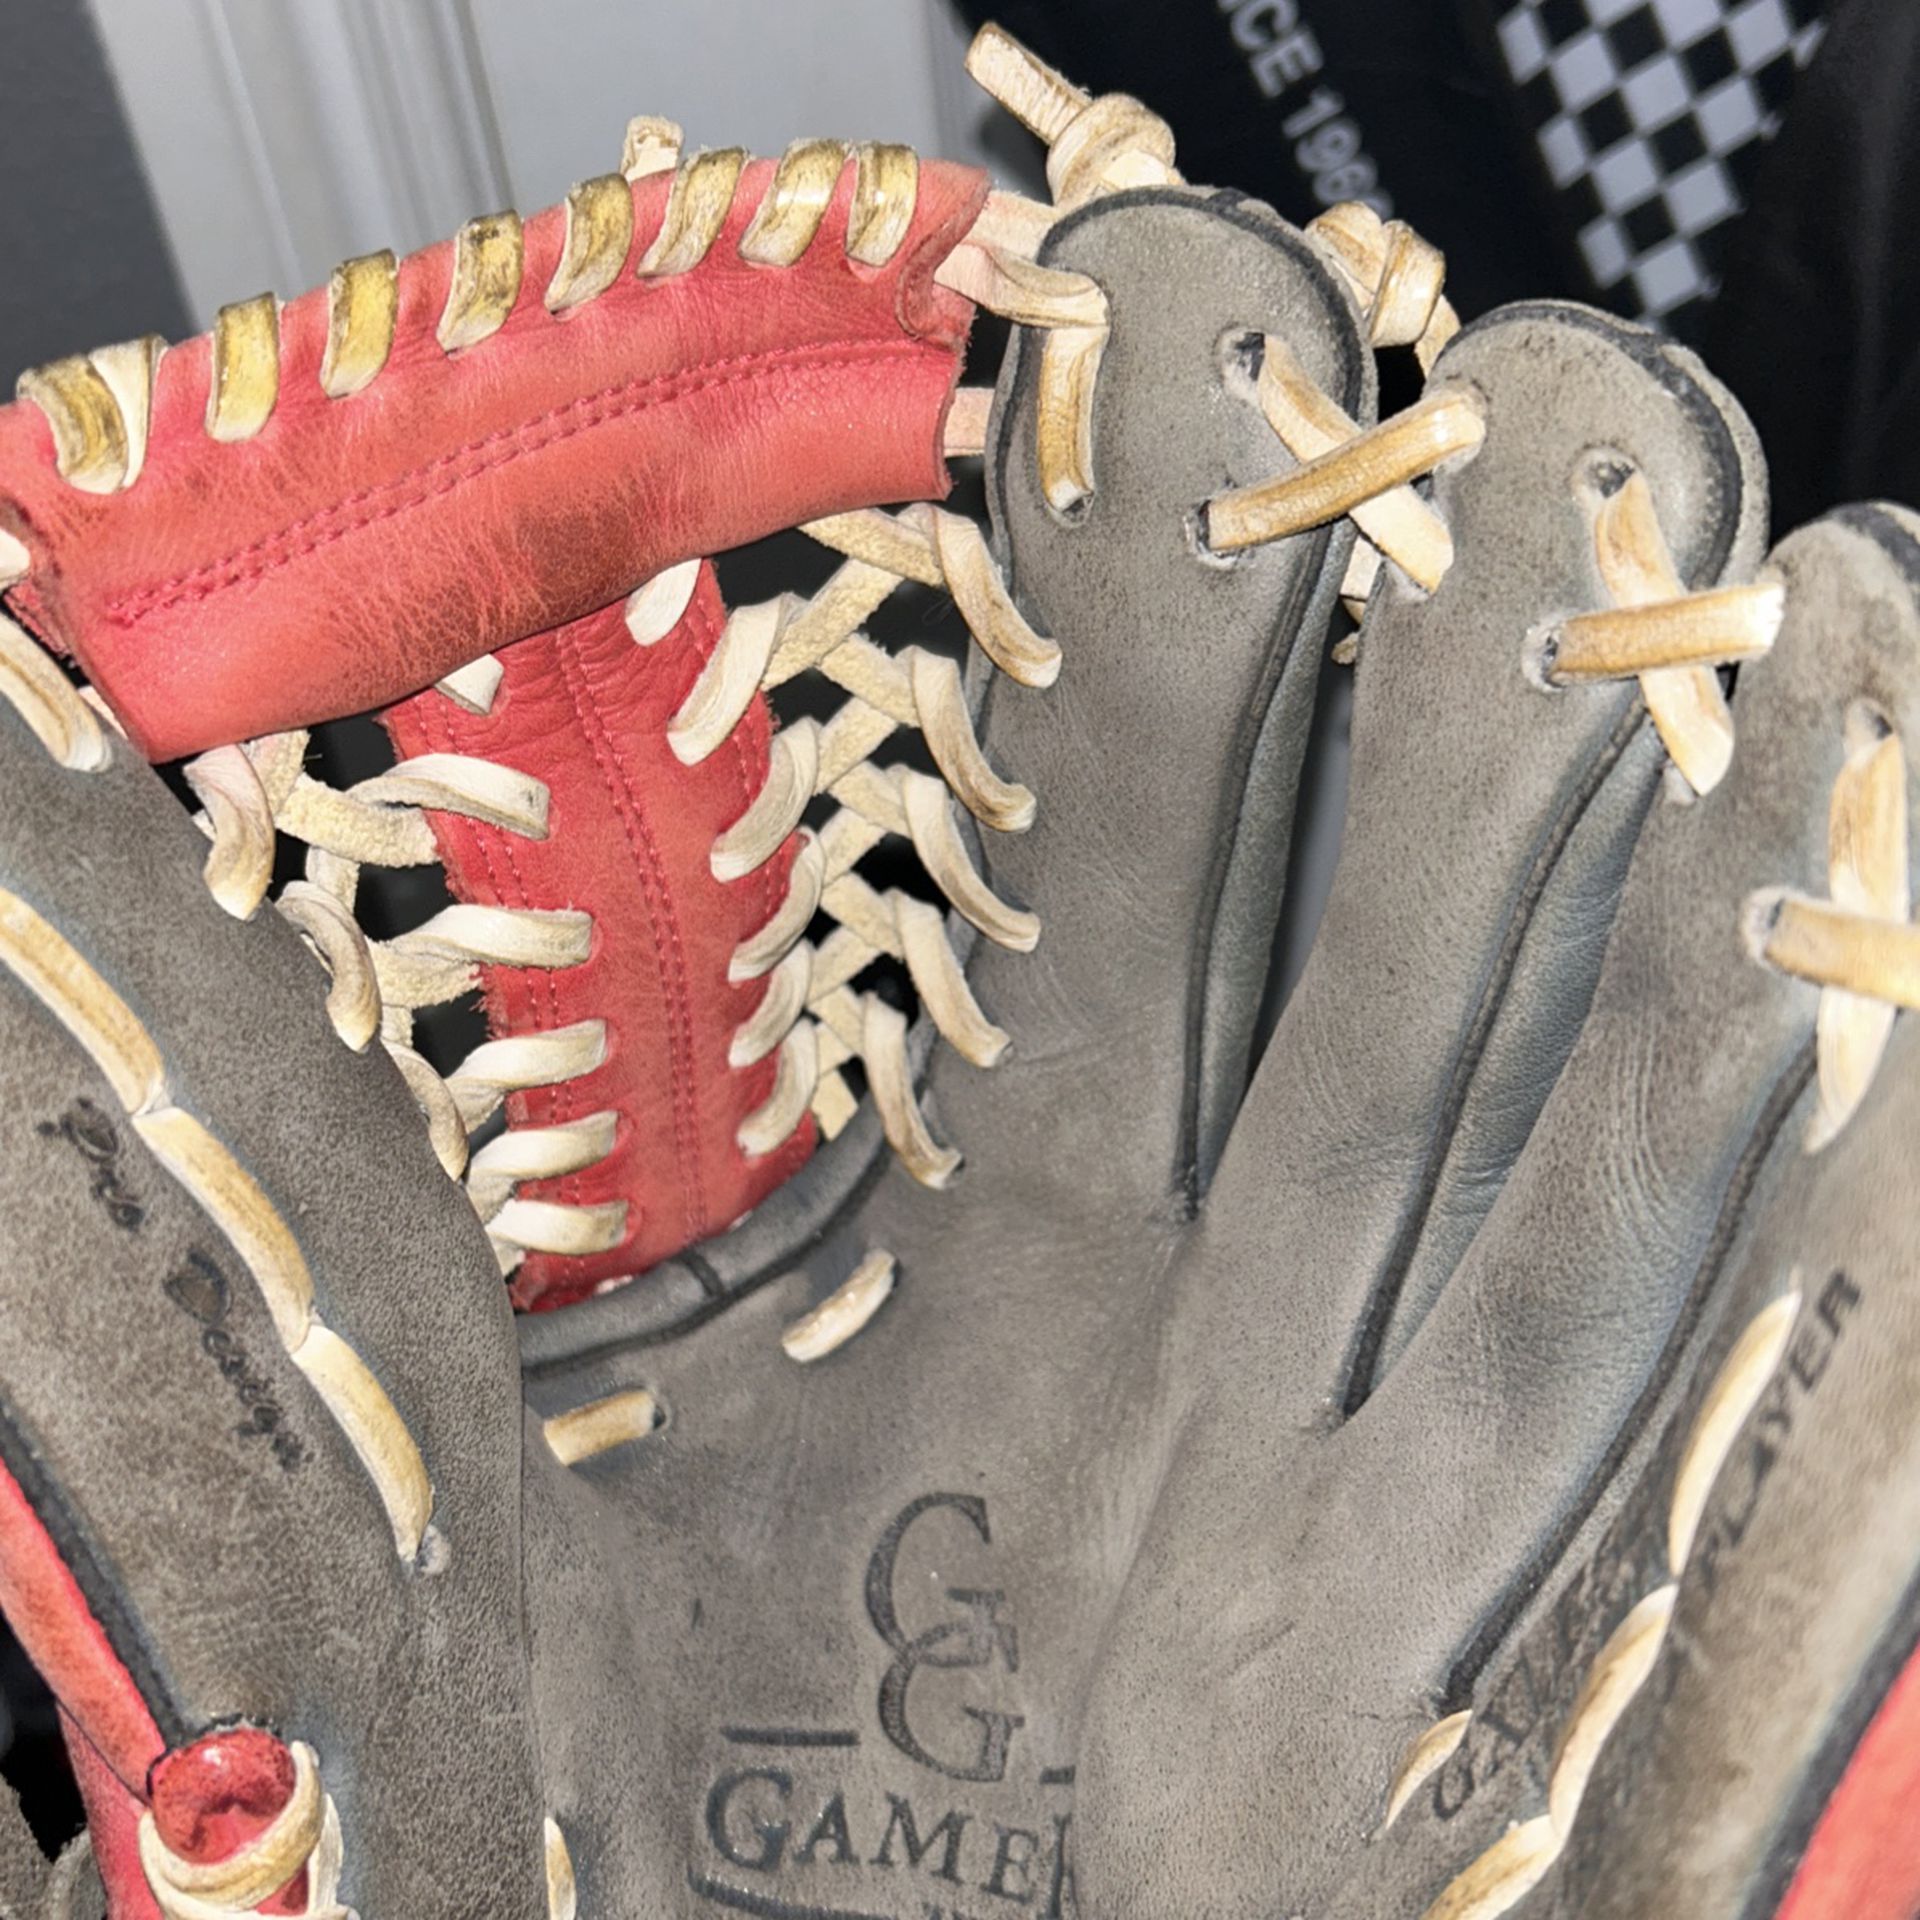 Rawlings Base Ball Glove